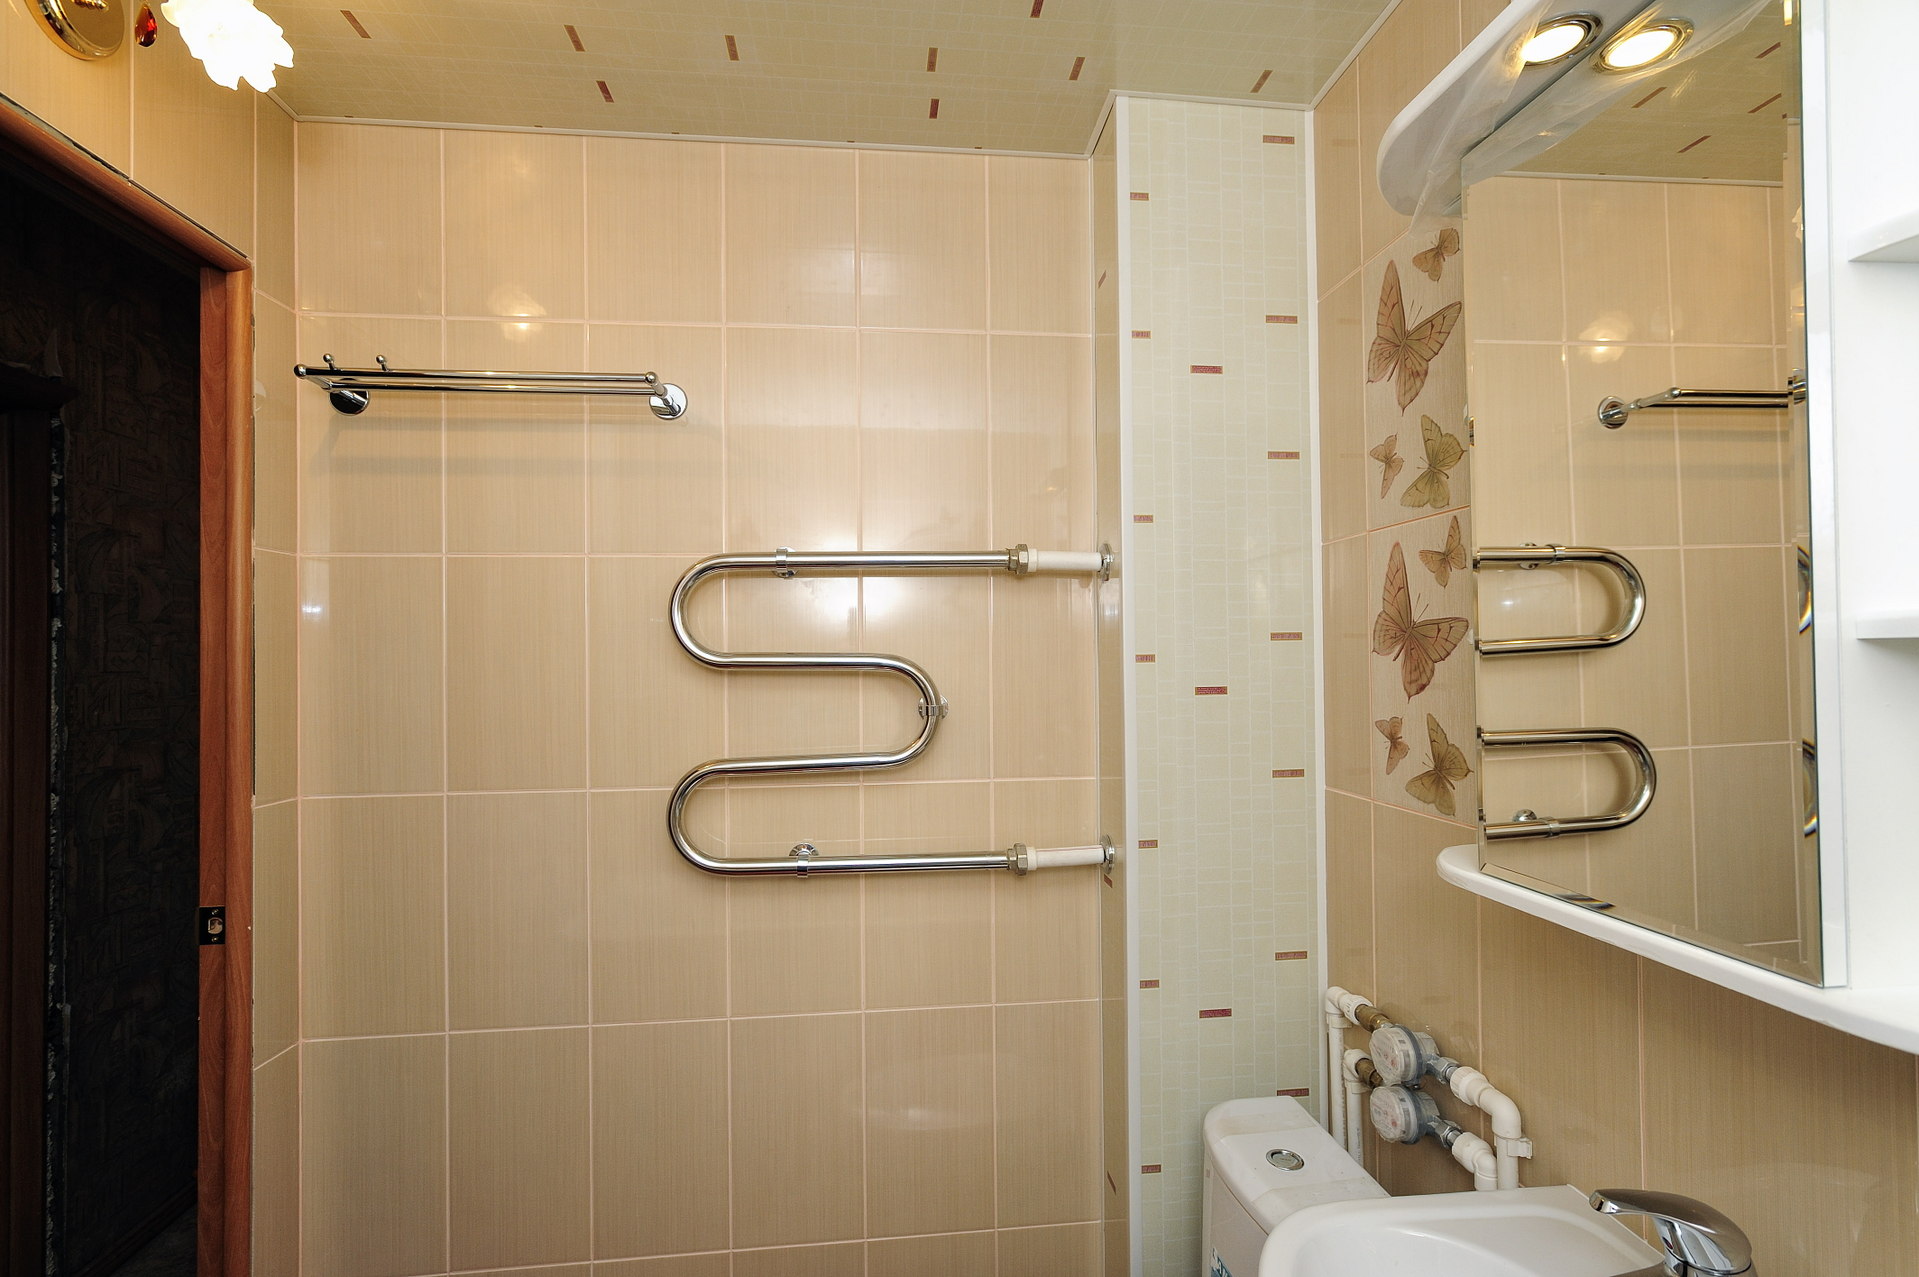 Ванная комната стояк. Короб для труб в ванной. Короб скрыть трубы в ванной. Короб закрыть трубы в ванной. Короб для закрытия труб в ванной.